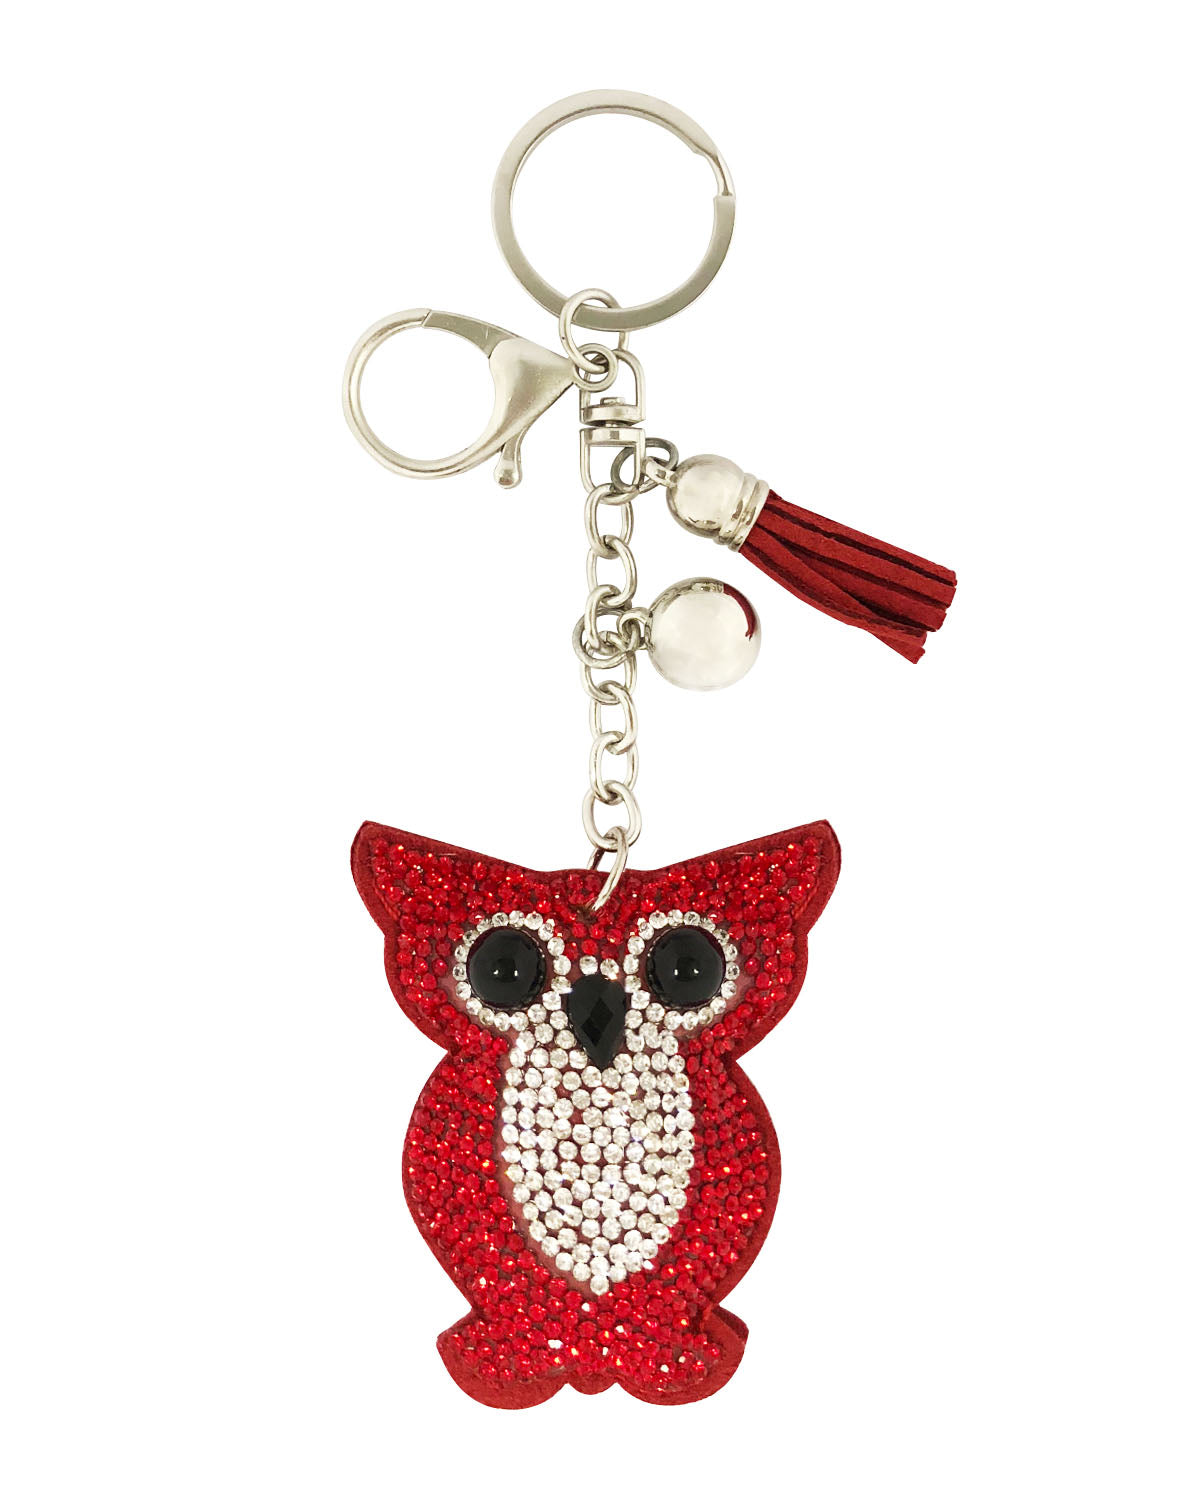 Multi Color Handmade Owl keychain, Key Chains